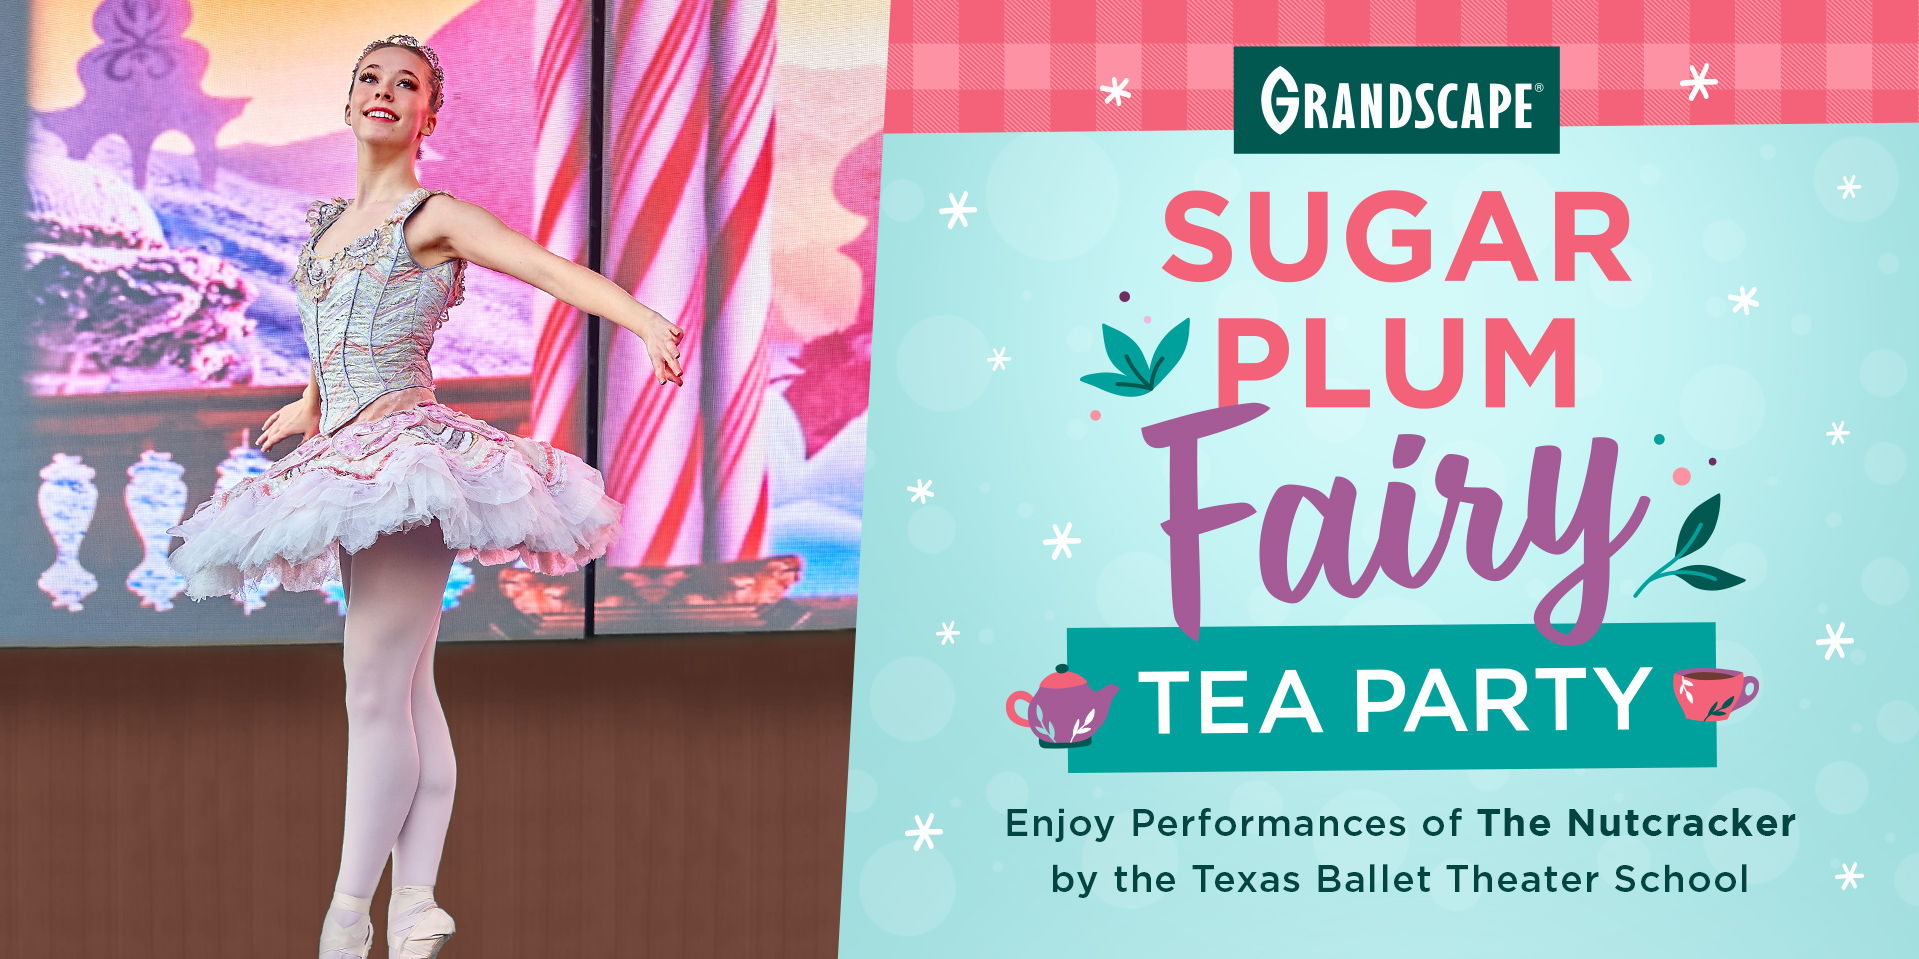 Sugar Plum Fairy Tea Party promotional image